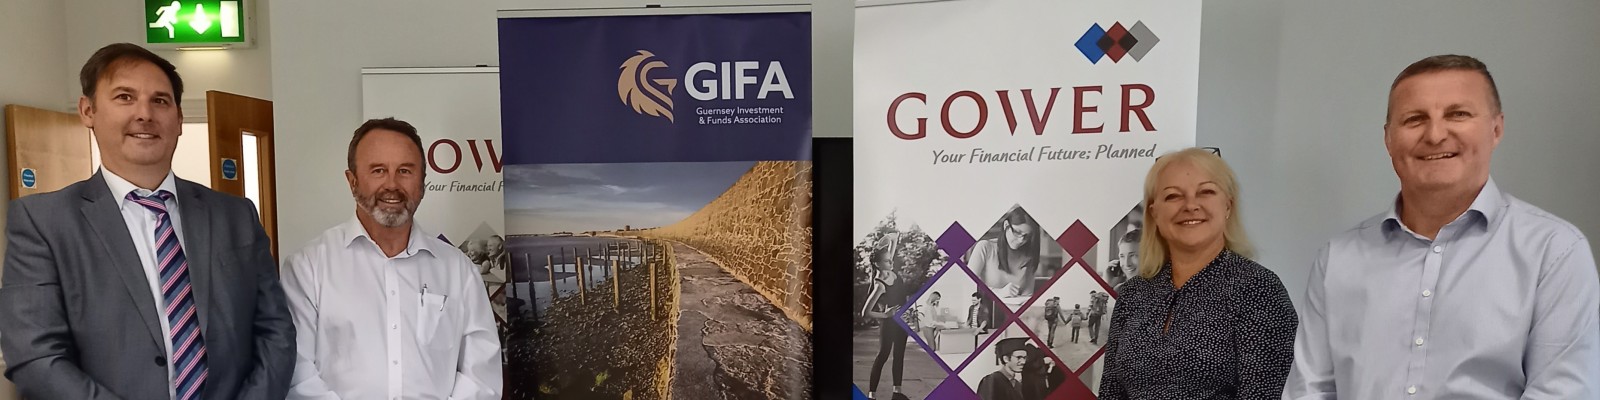 Gower Managing Your Money GIFA Academy